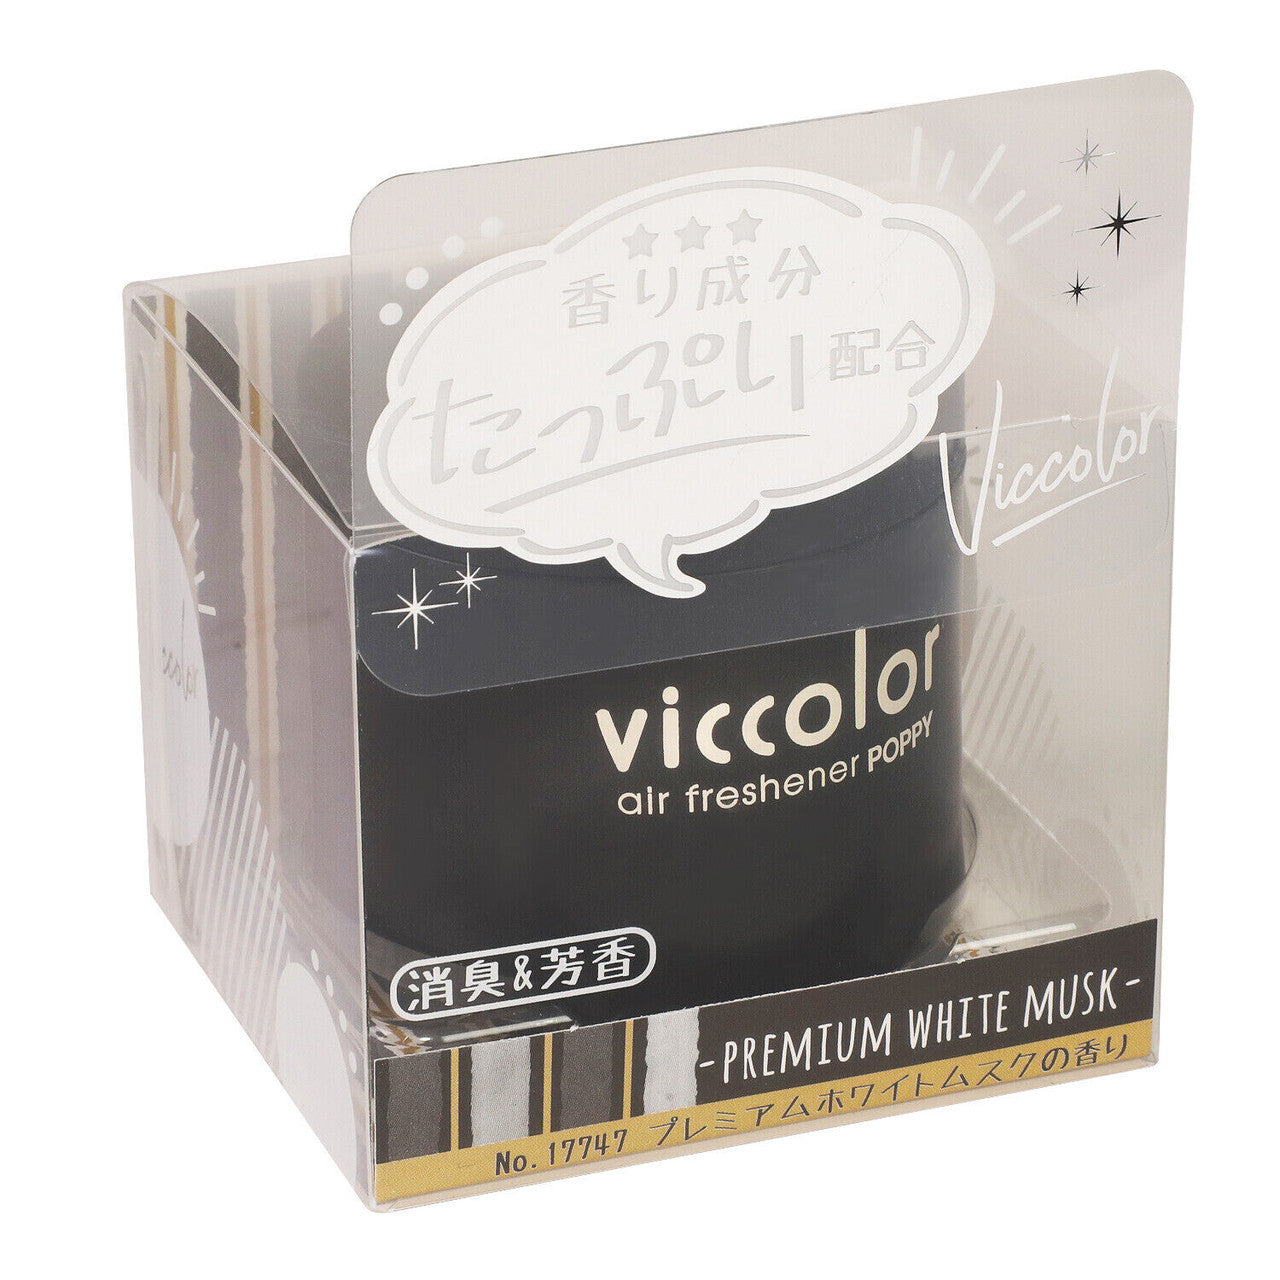 Viccolor Air Freshener - Premium White Musk